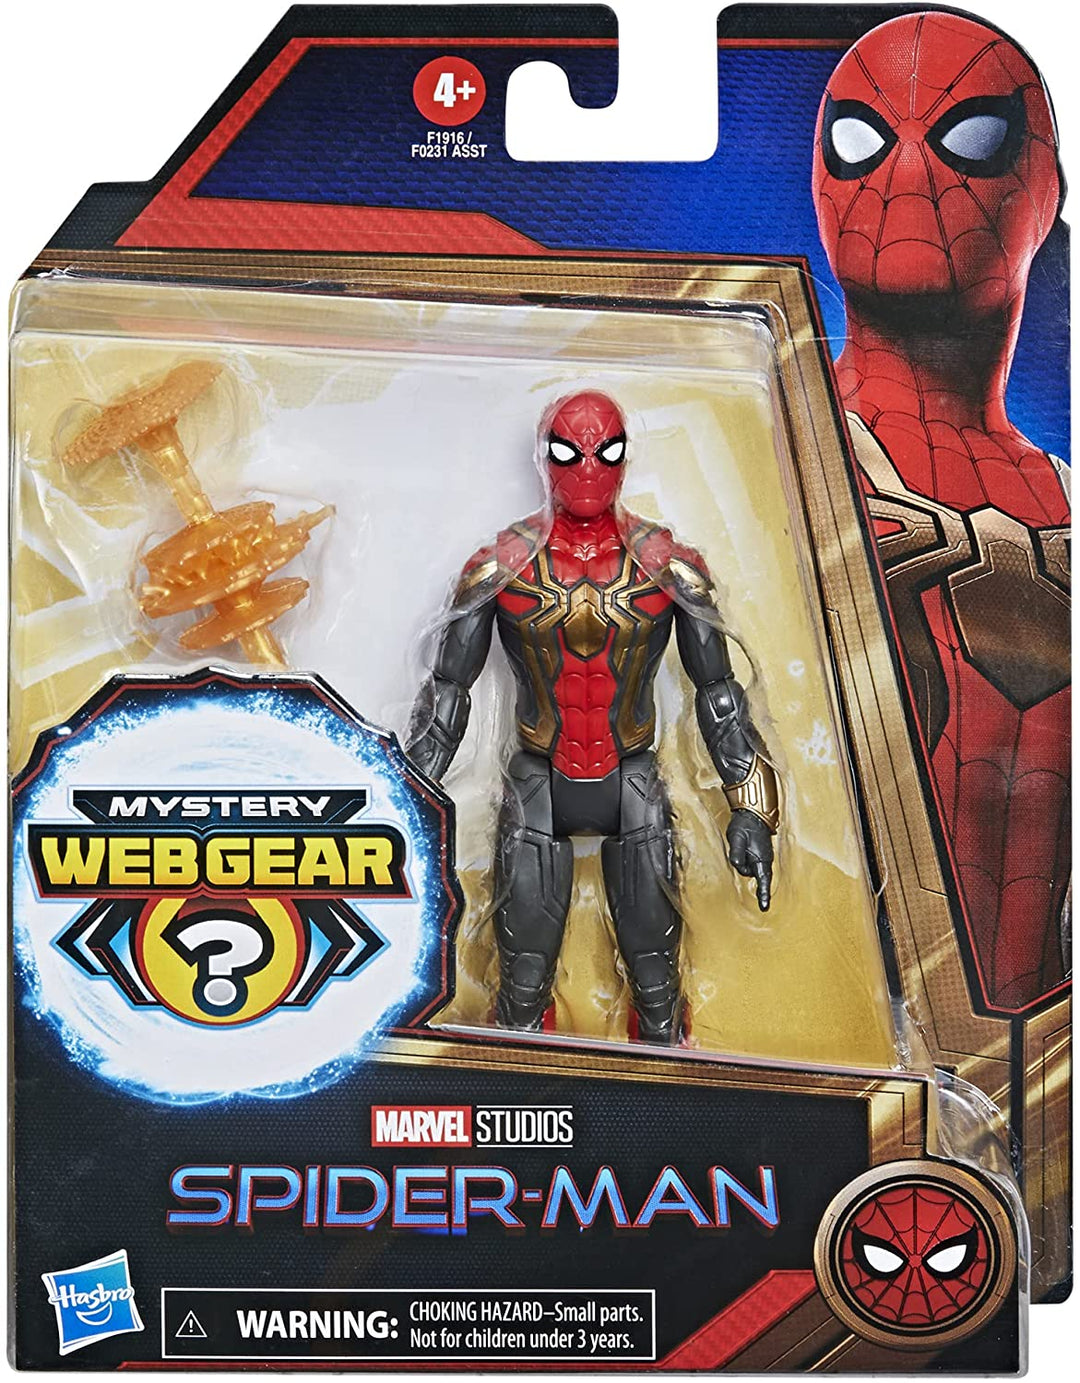 Spider-Man Iron Spider Mystery Web Gear 6 Inch Action Figure